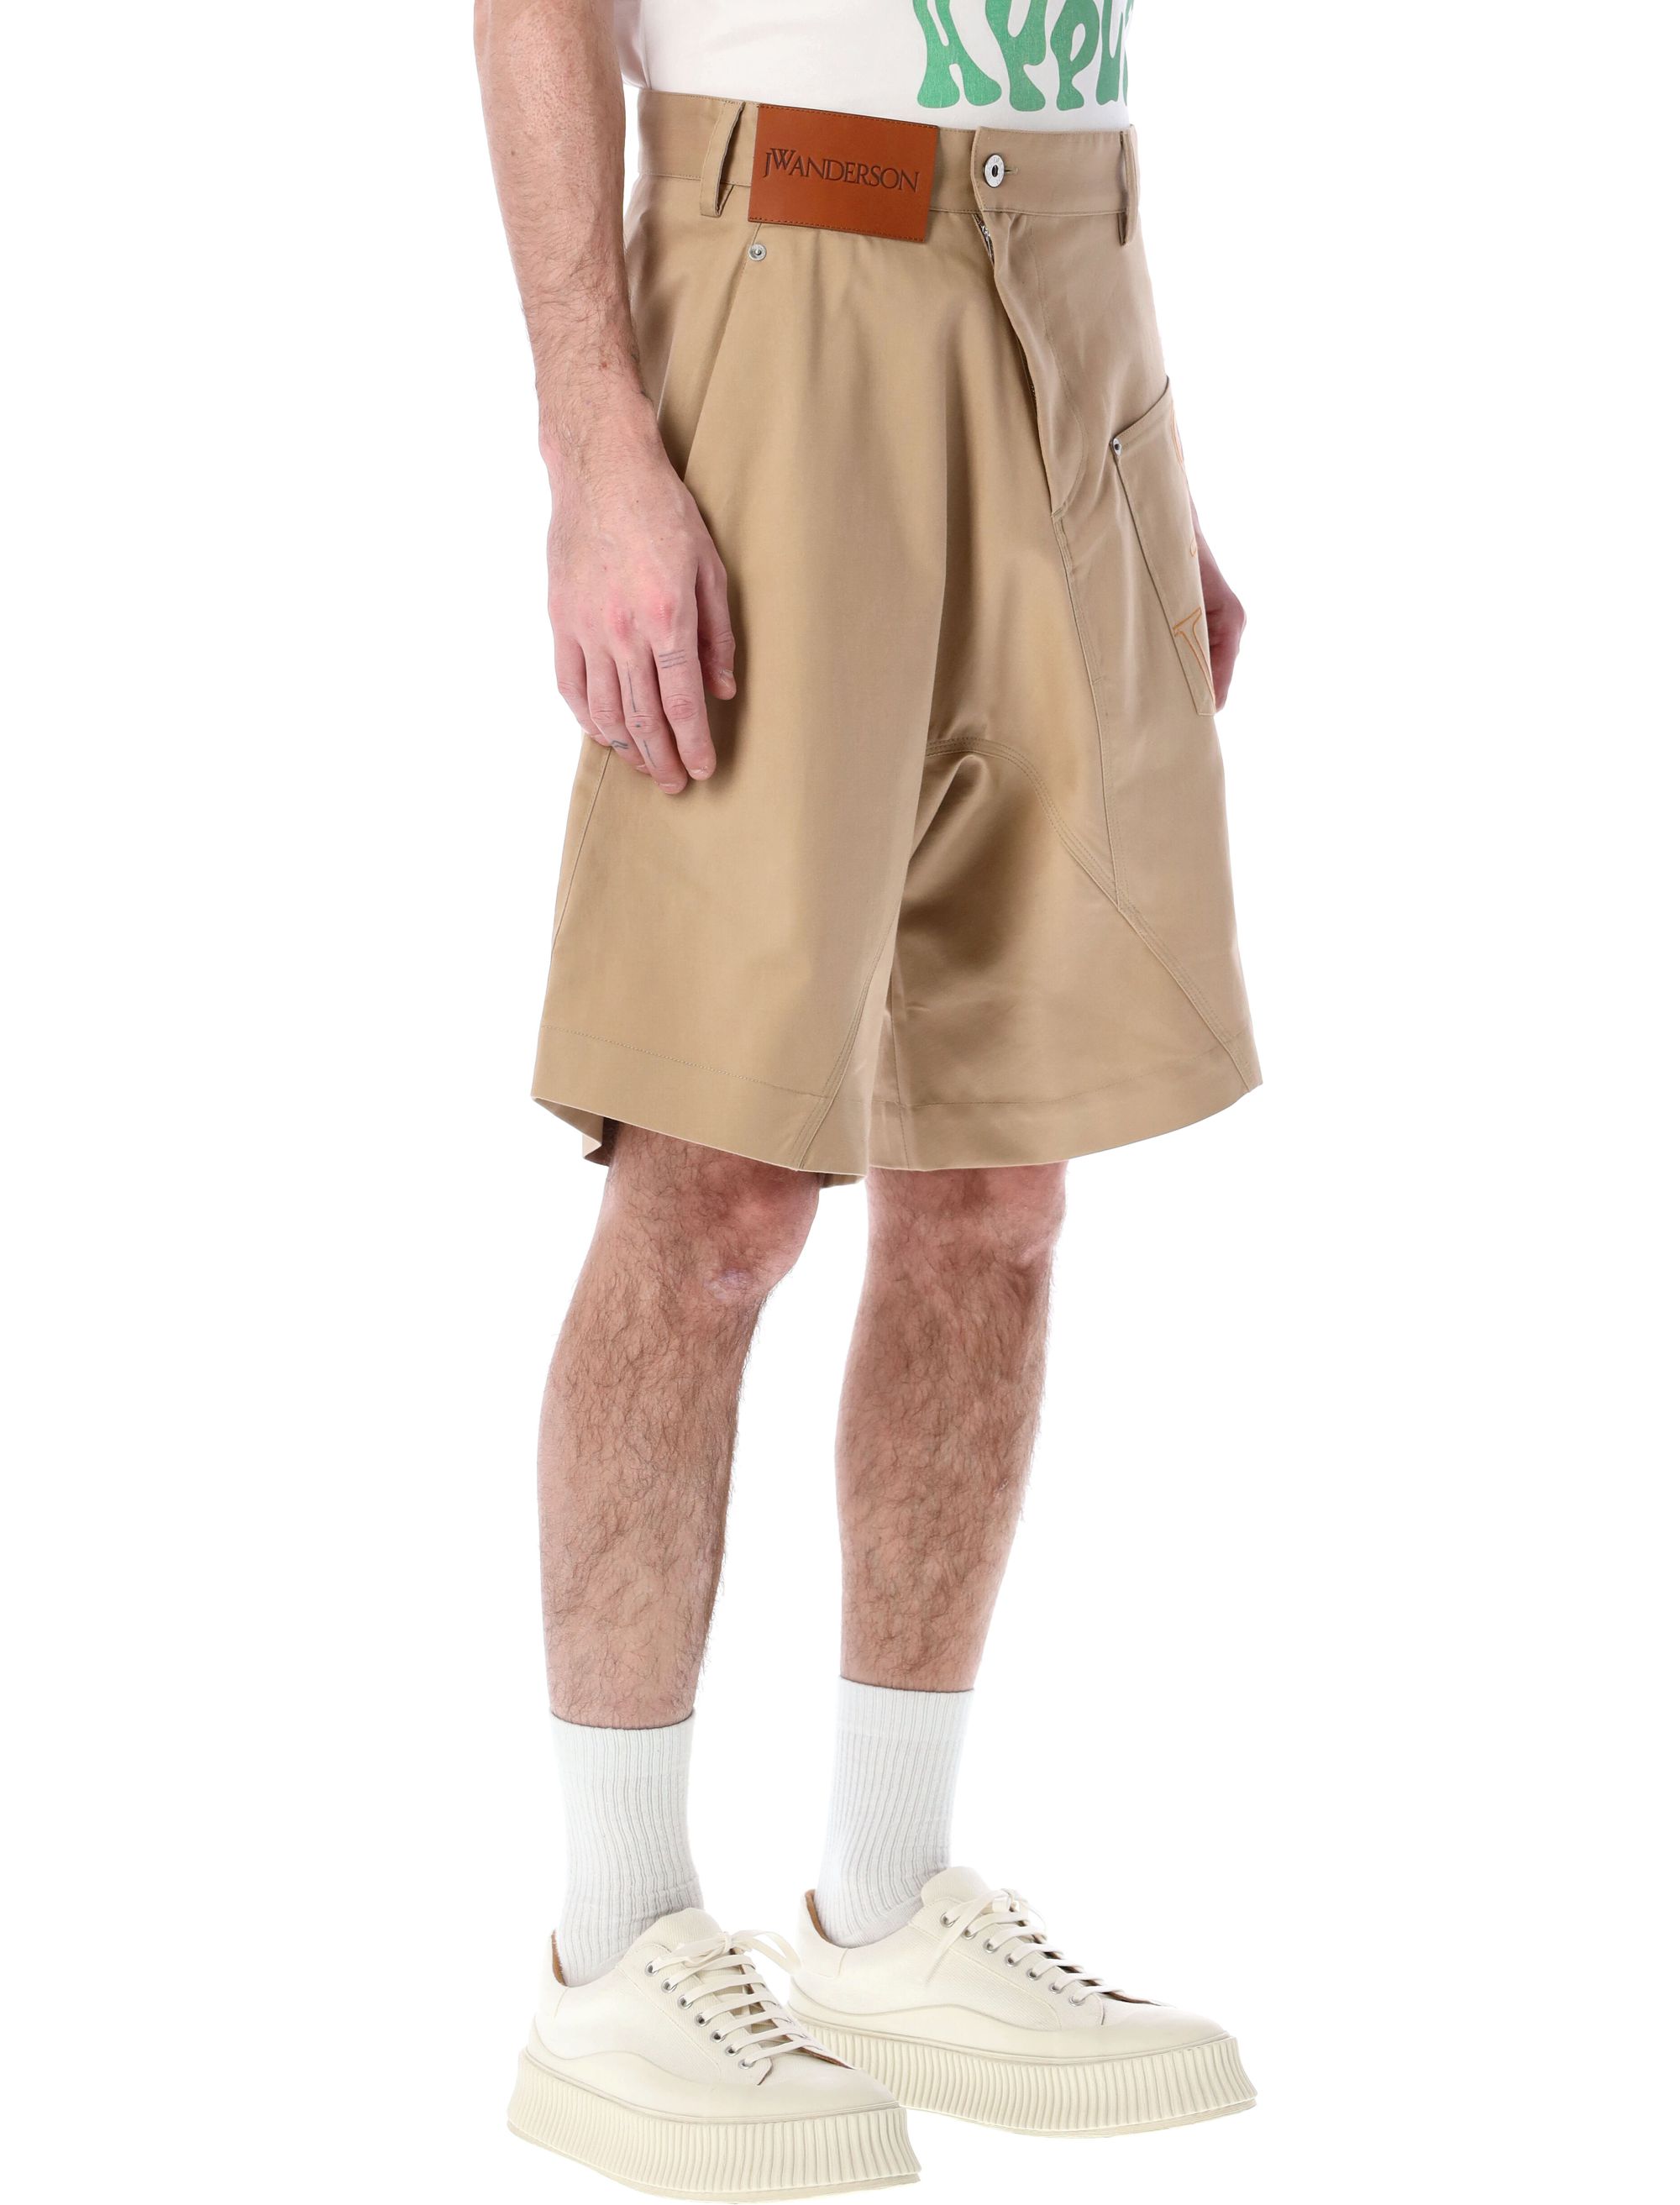 Alan - Overcast - Beige chino shorts - Molo